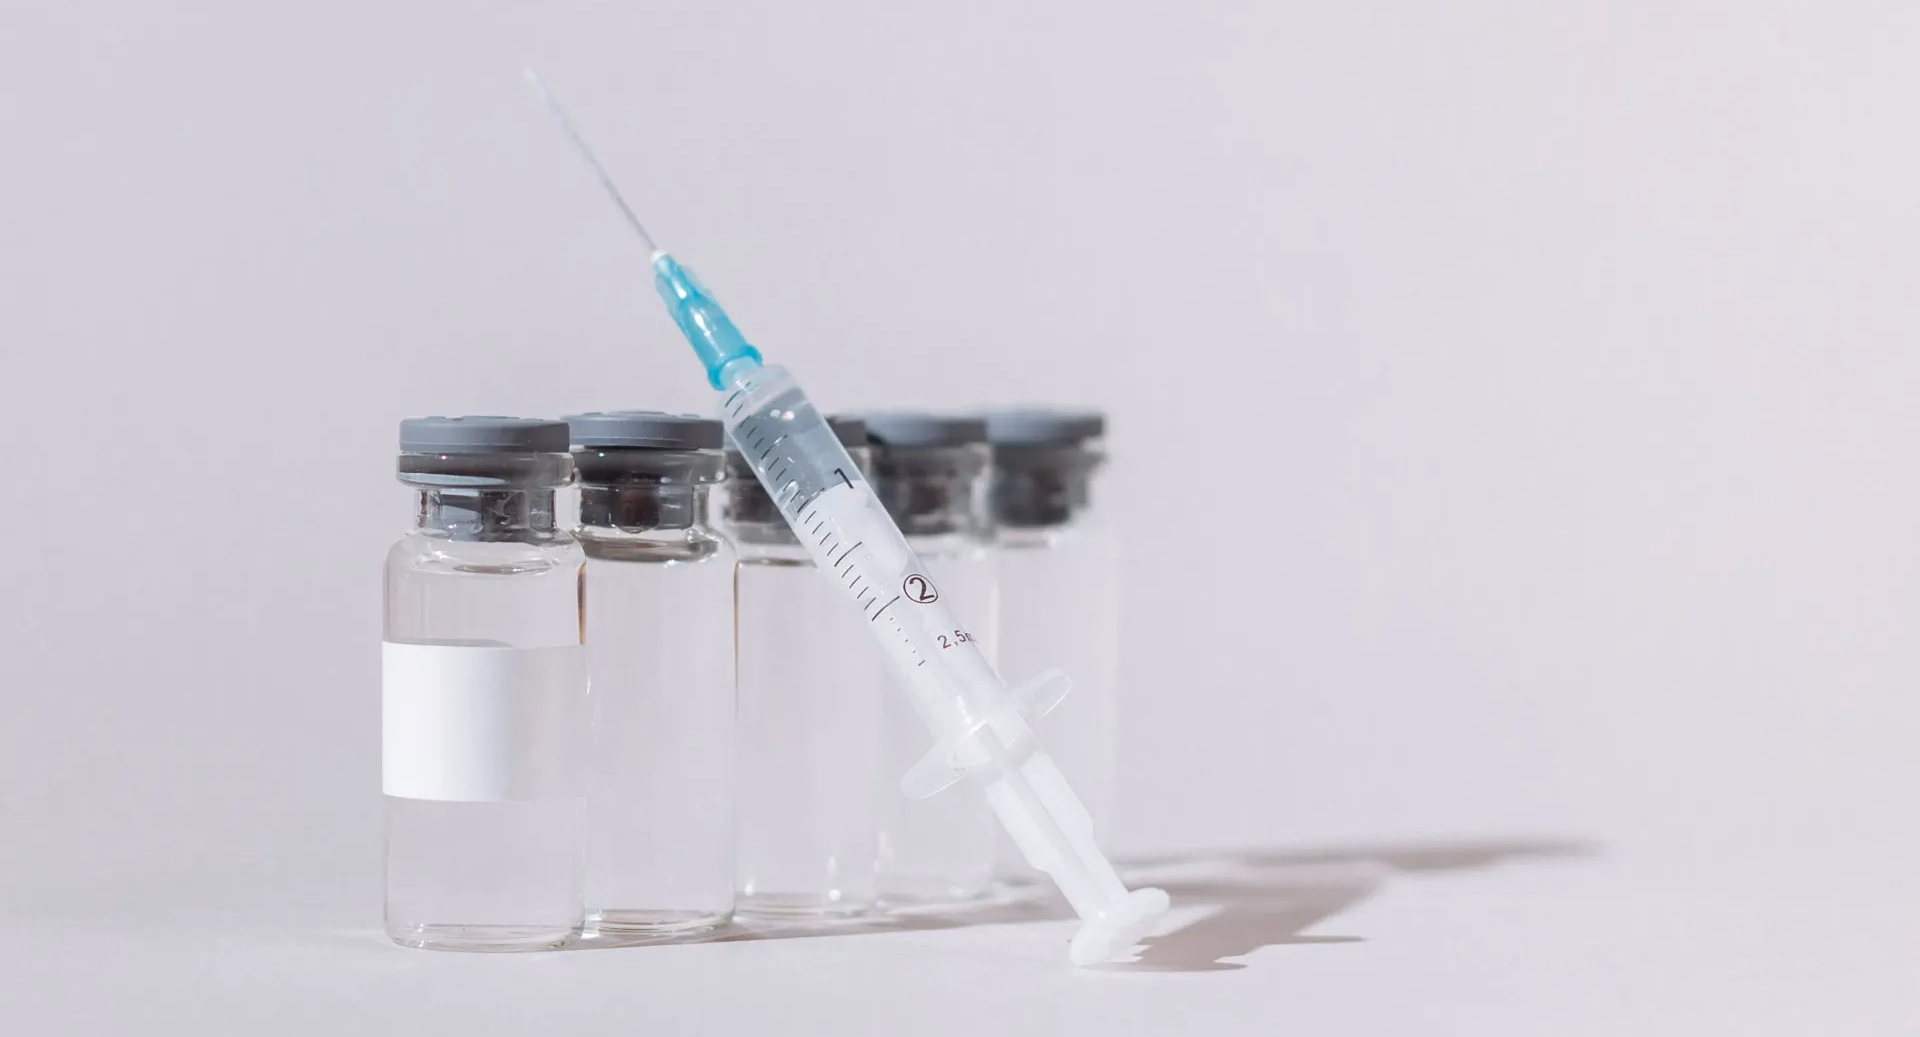 Vaccine vials & needle